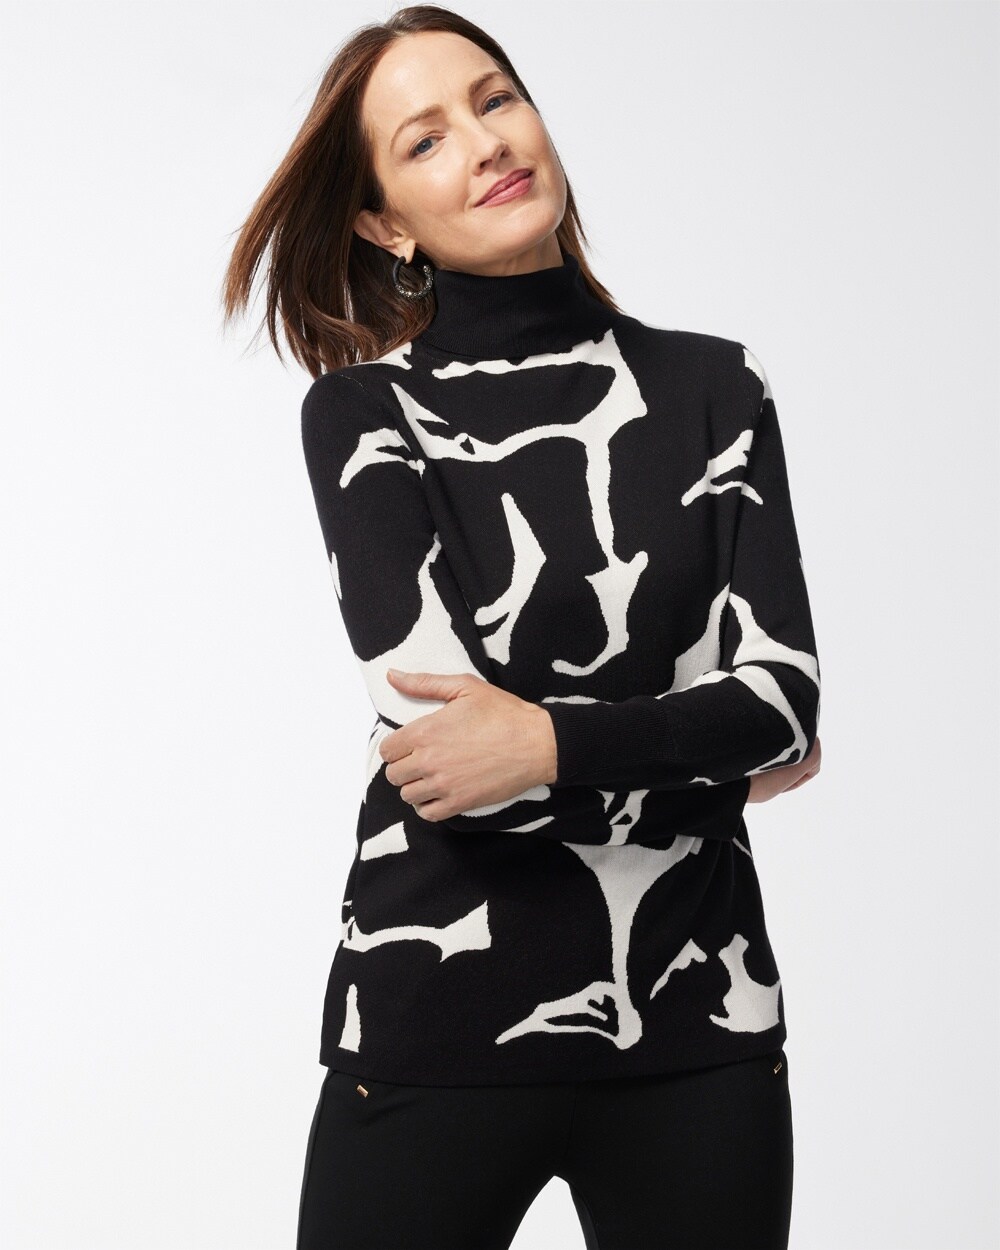 Black & White Turtleneck Sweater